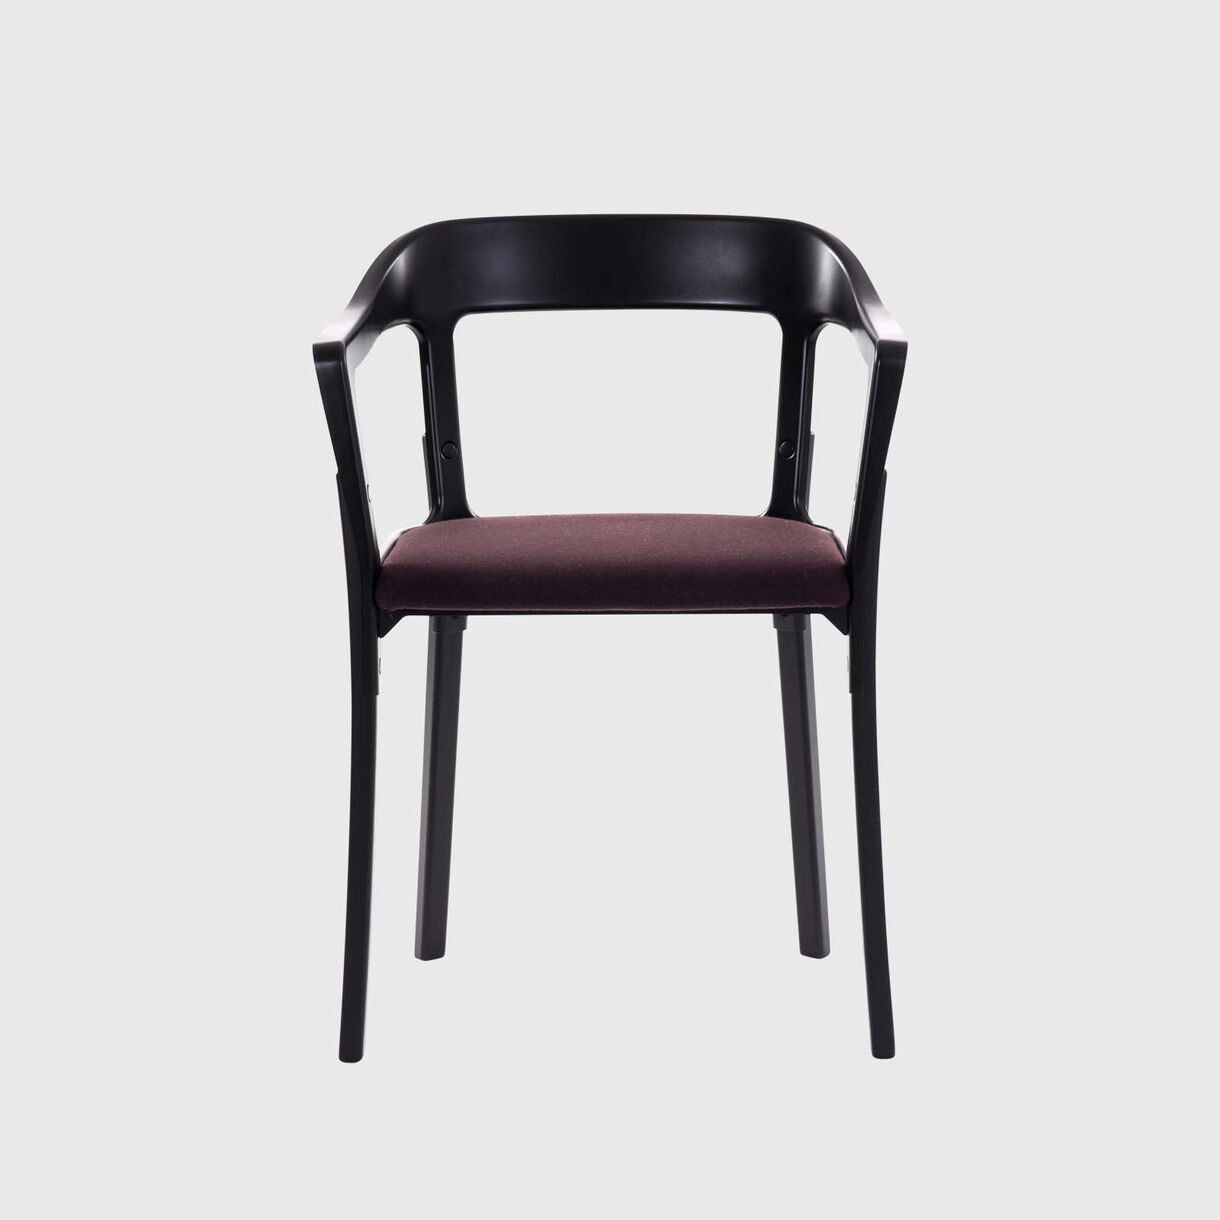 Steelwood Chair with Cushion, Black & Dark Brown